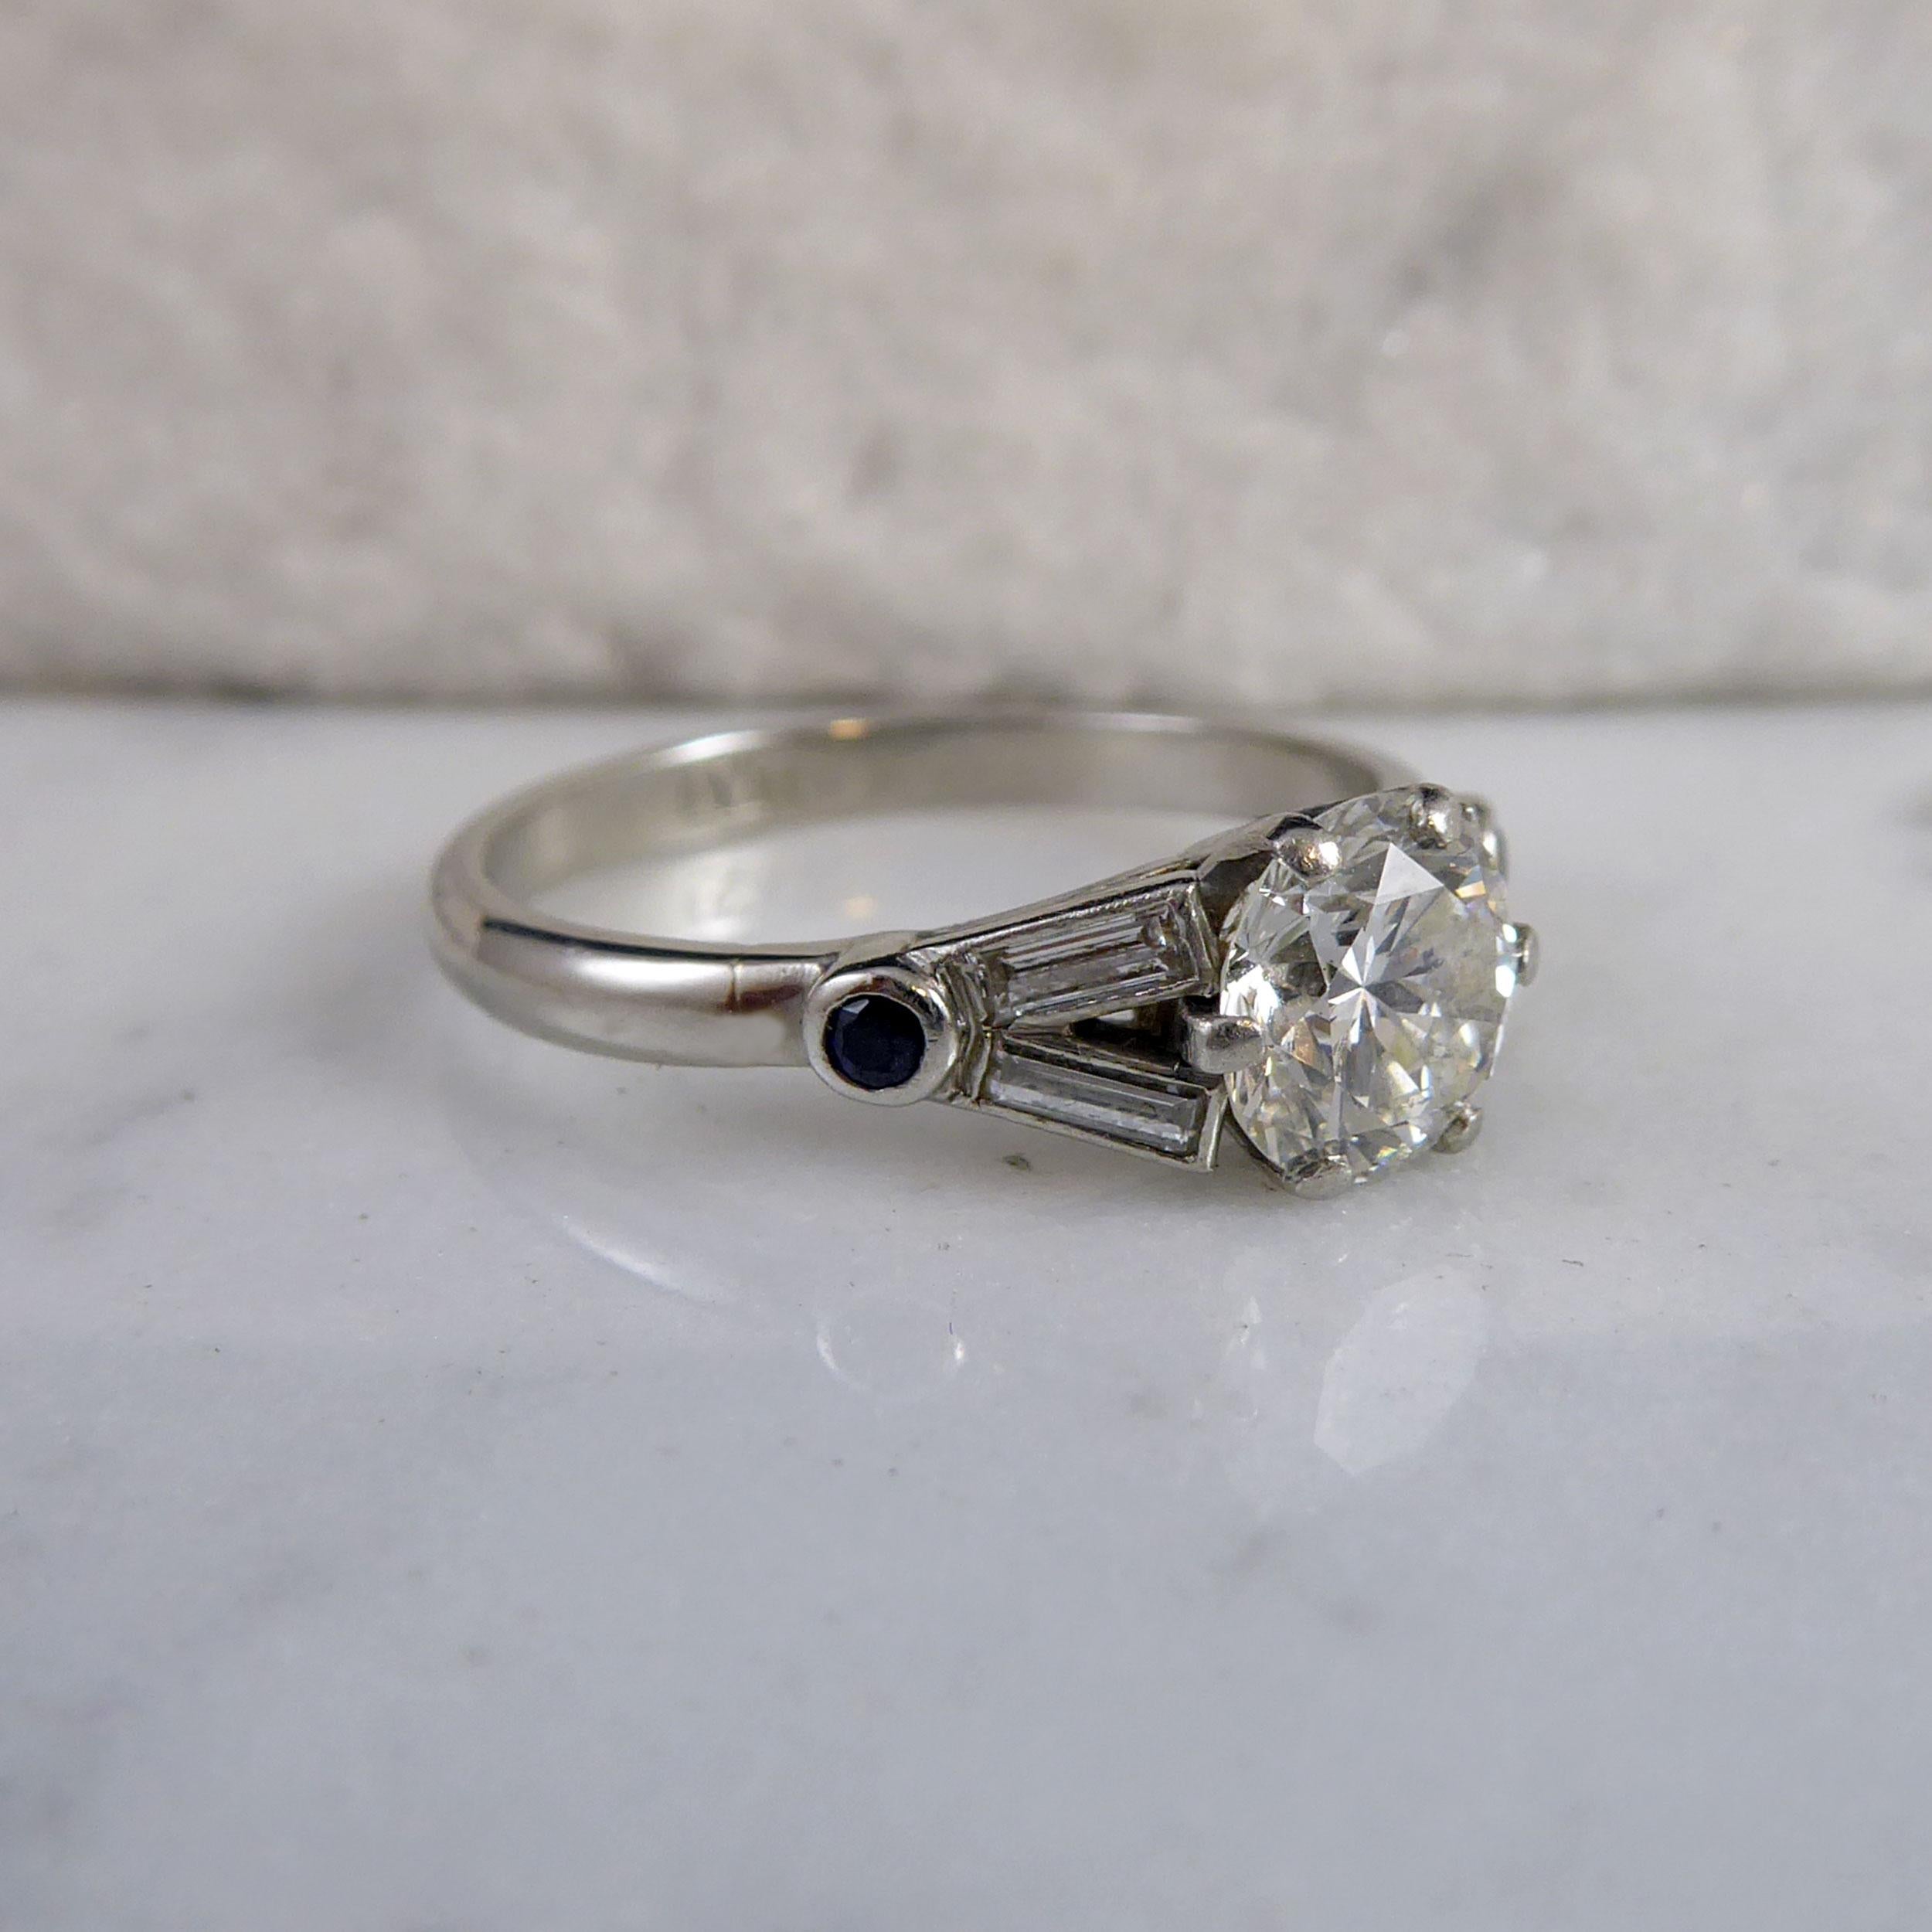 Women's Art Deco 1.10 Carat Diamond Ring with Baguetee Diamond and Sapphire Shoulders